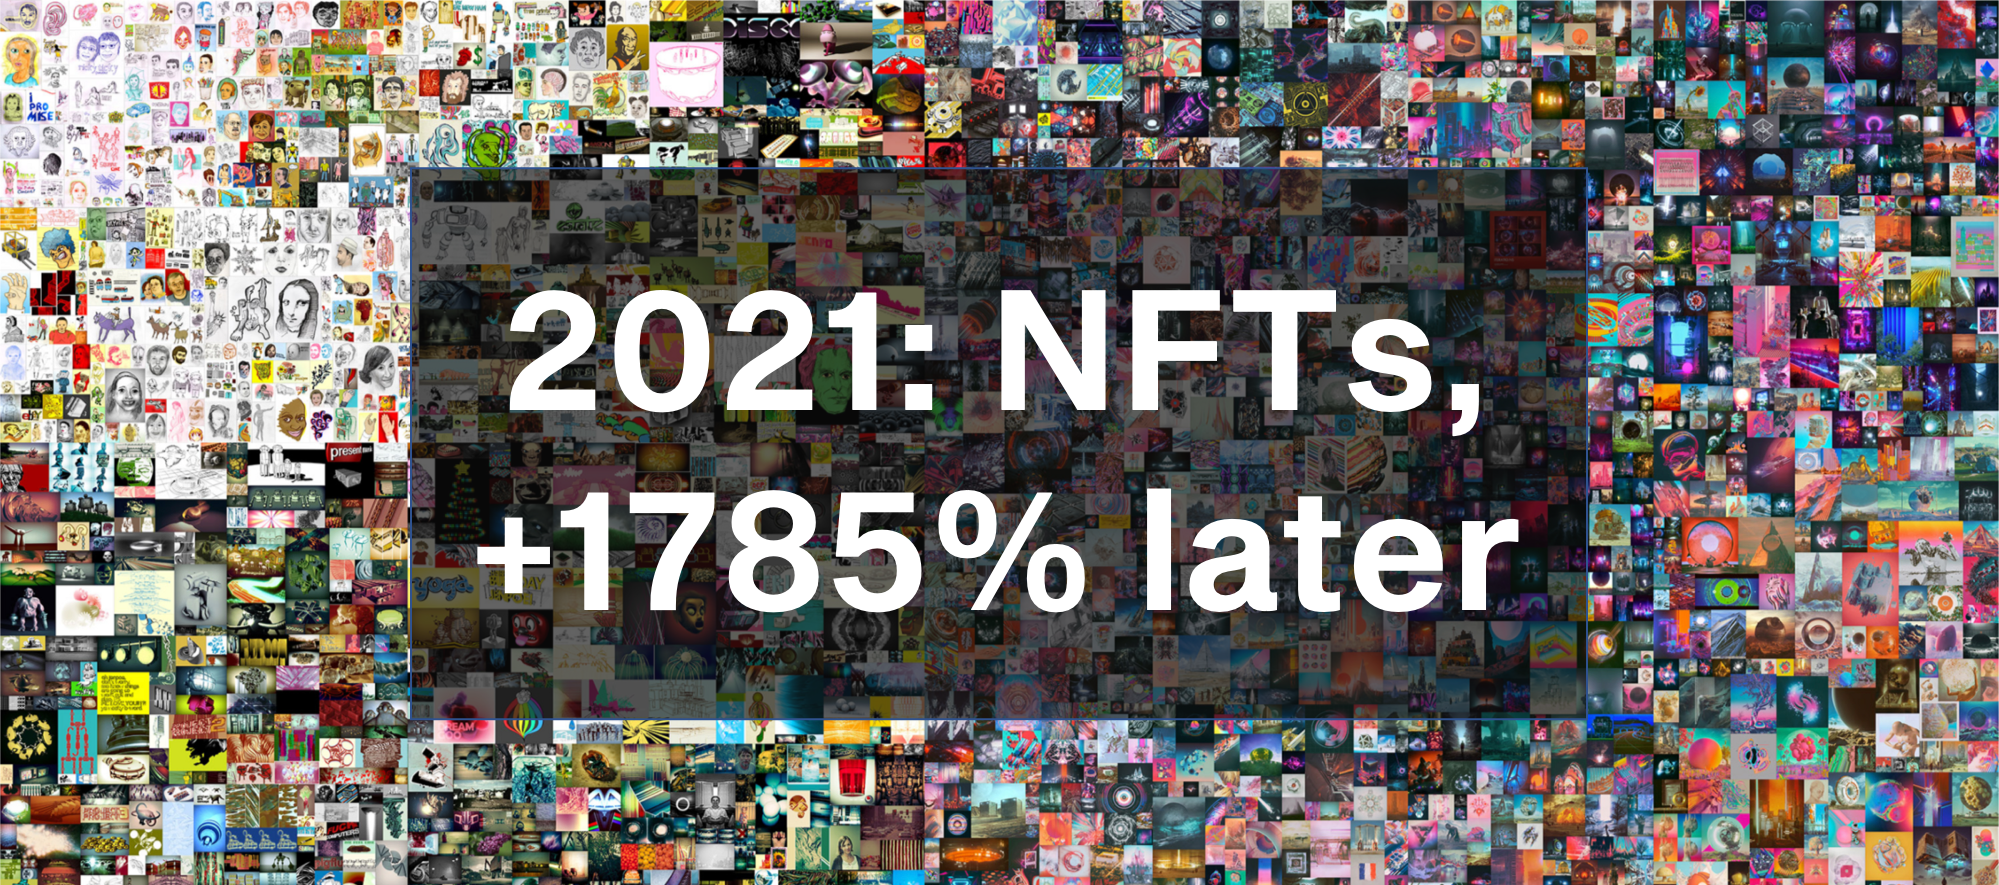 Top tier NFTs stolen in NFT Trader hack